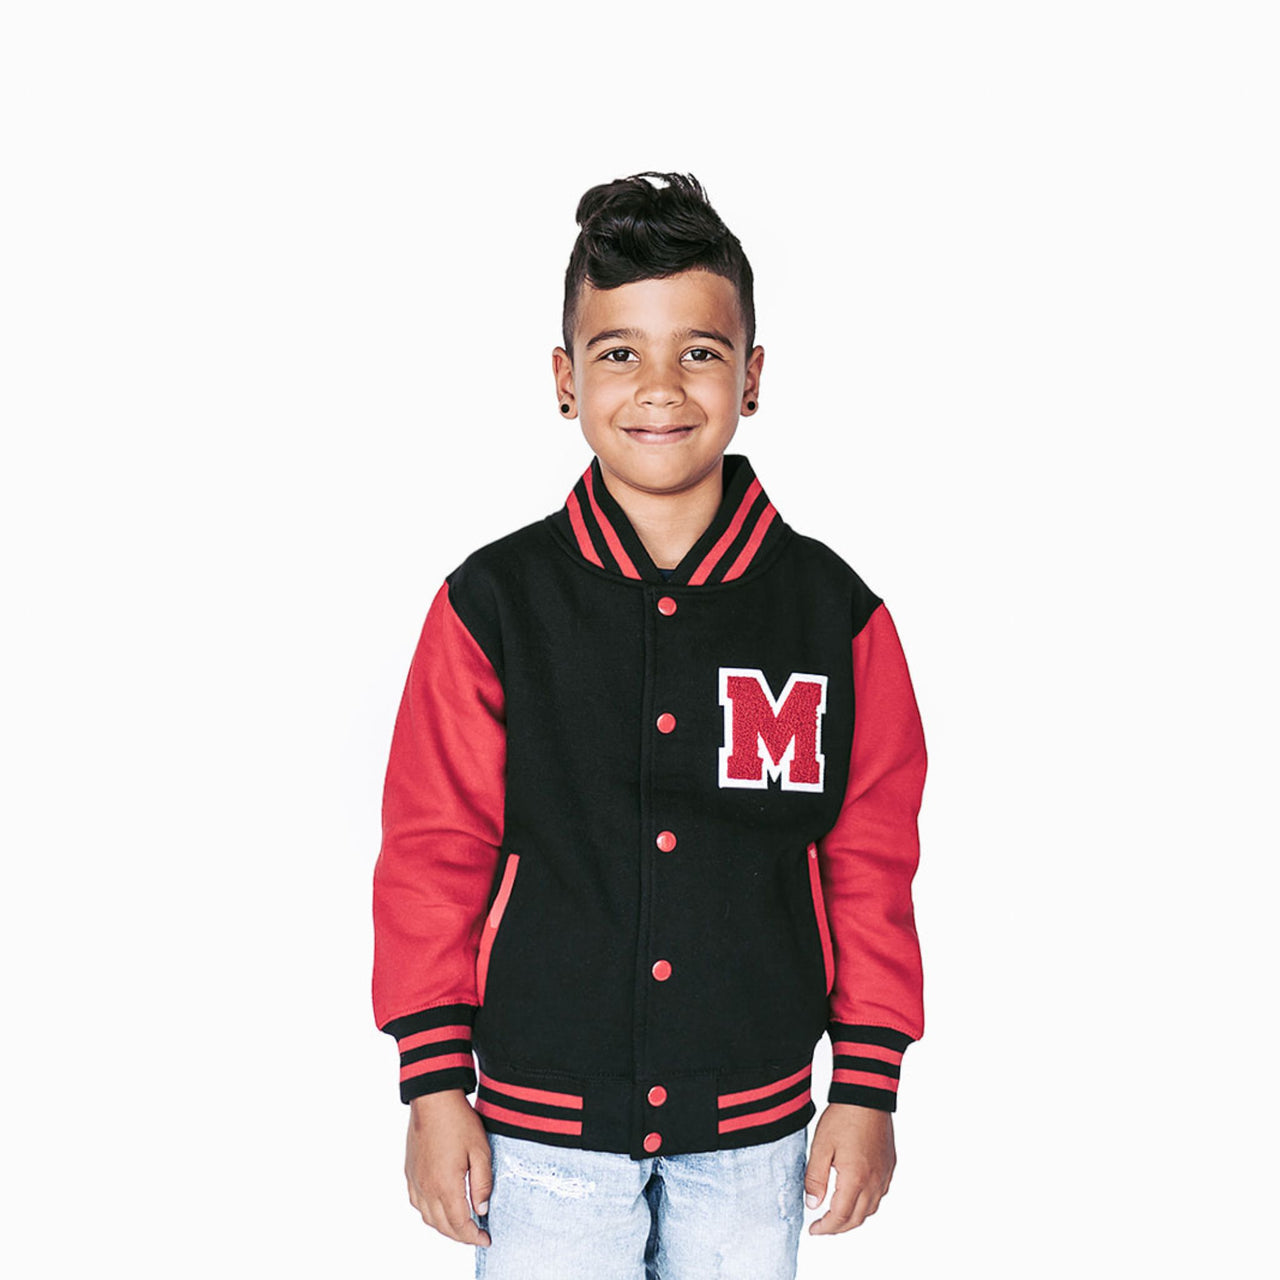 Personalized Kids Sweatshirt Varsity Jacket BLACK/RED